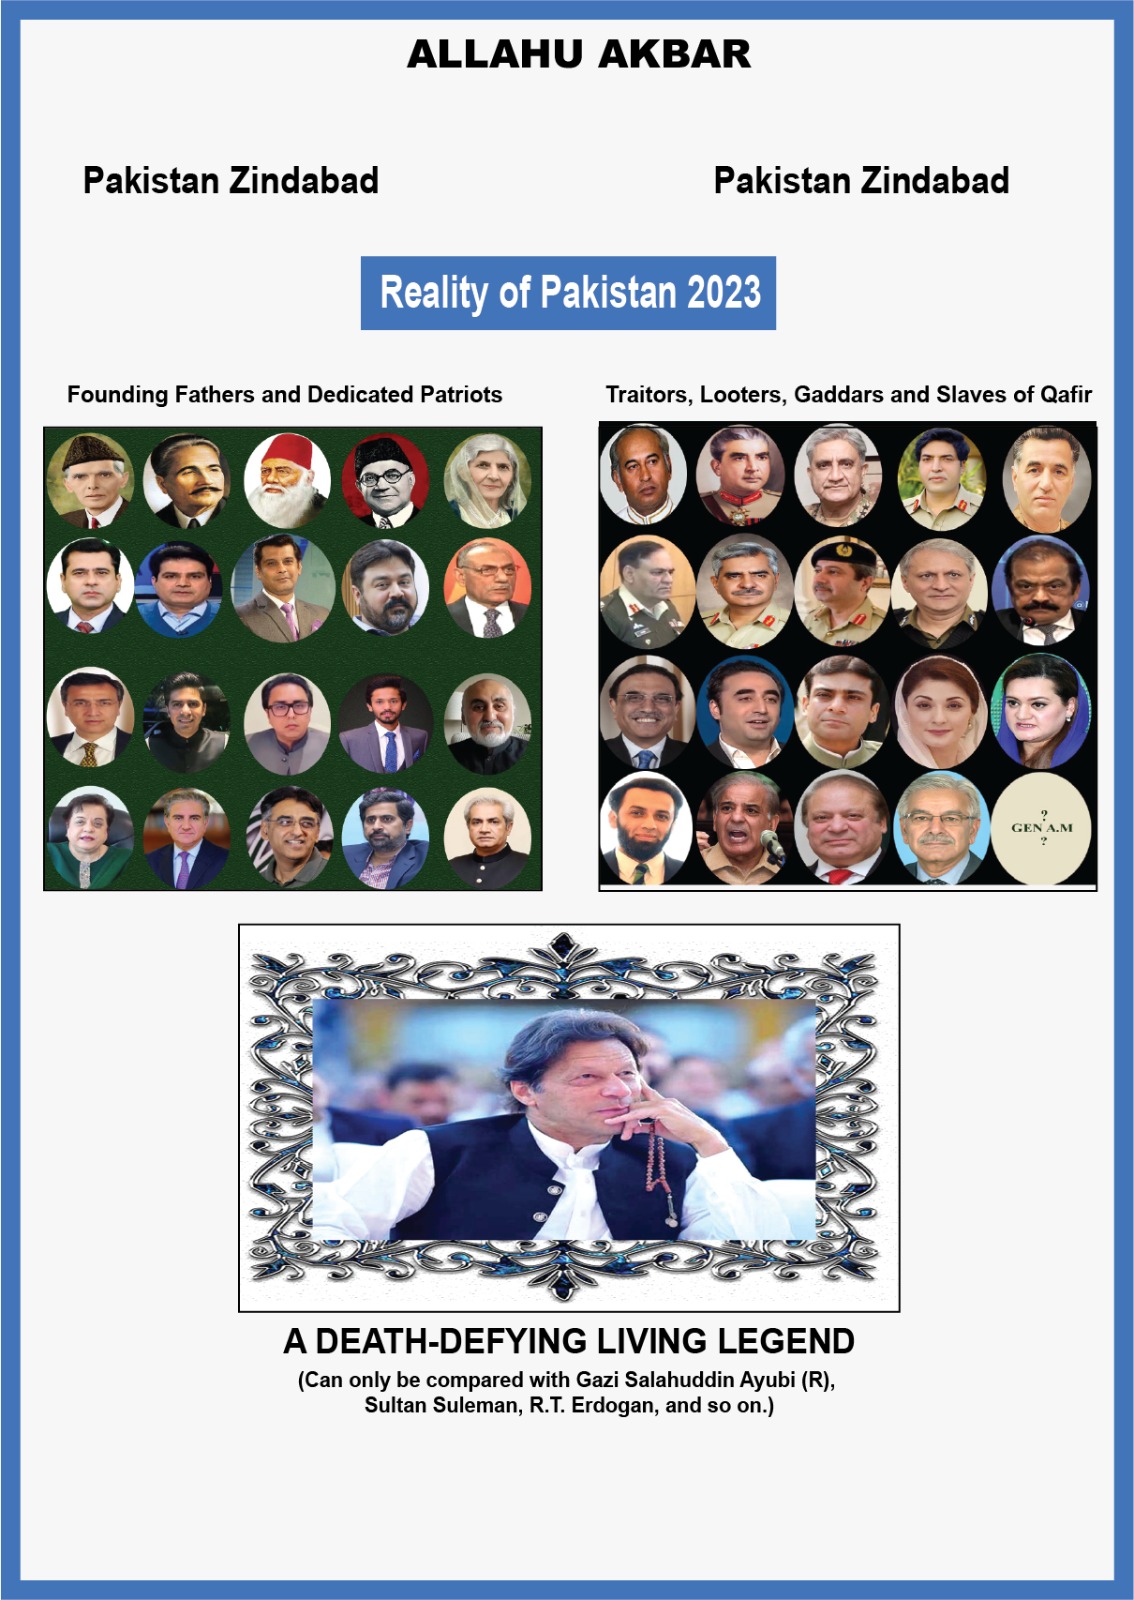 "The reality of Pakistan 2023."